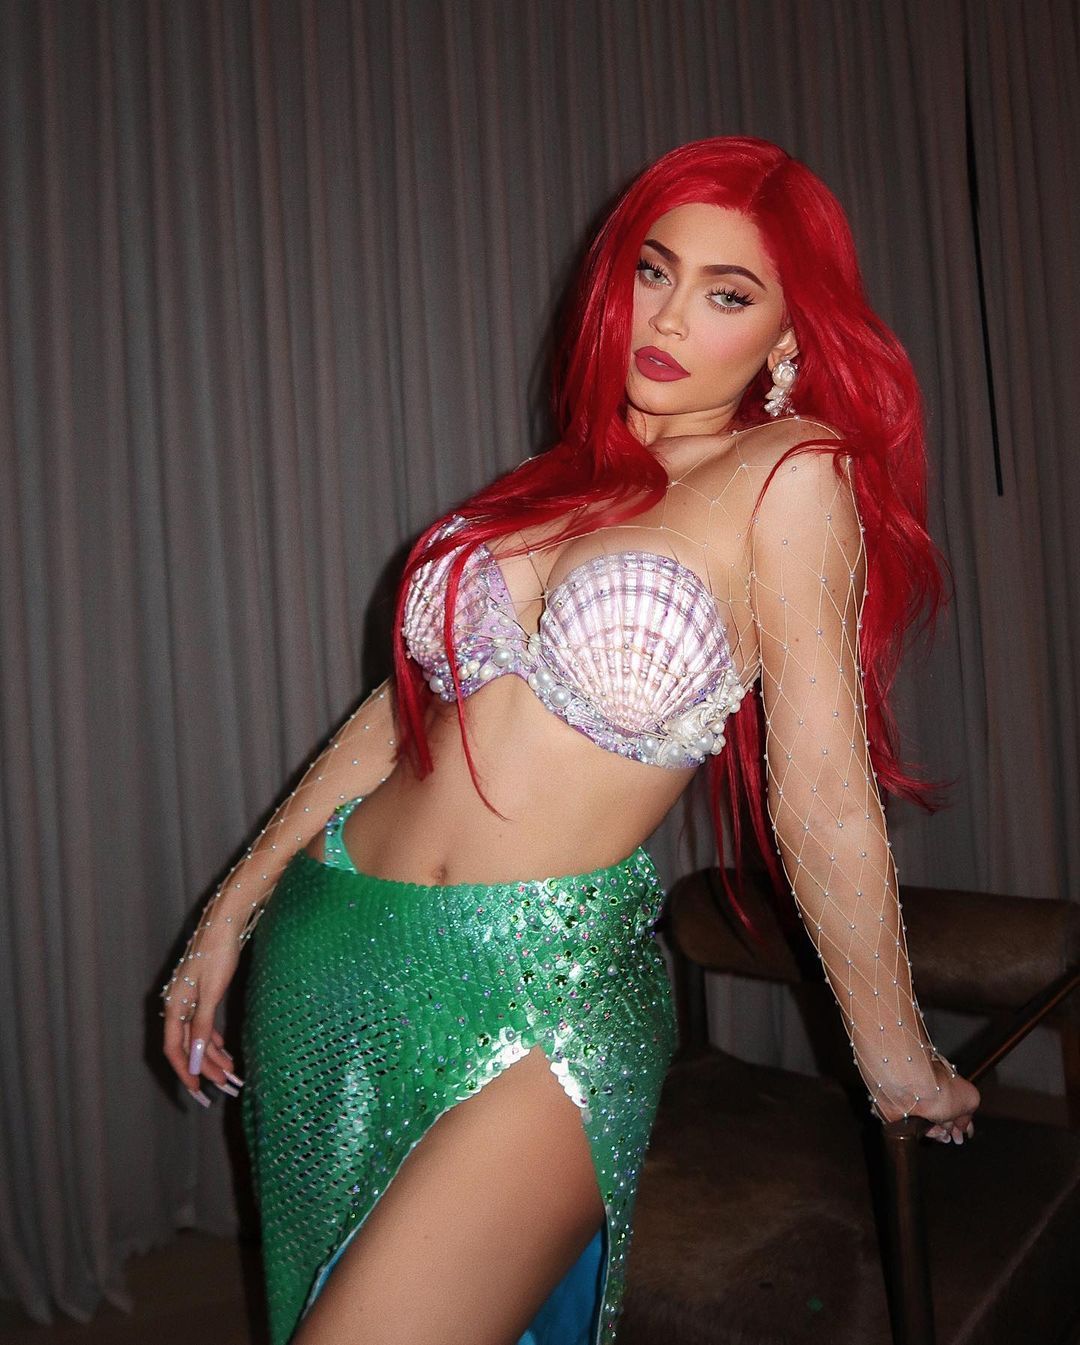 Mermaid Halloween Makeup and Costume For Kids! 